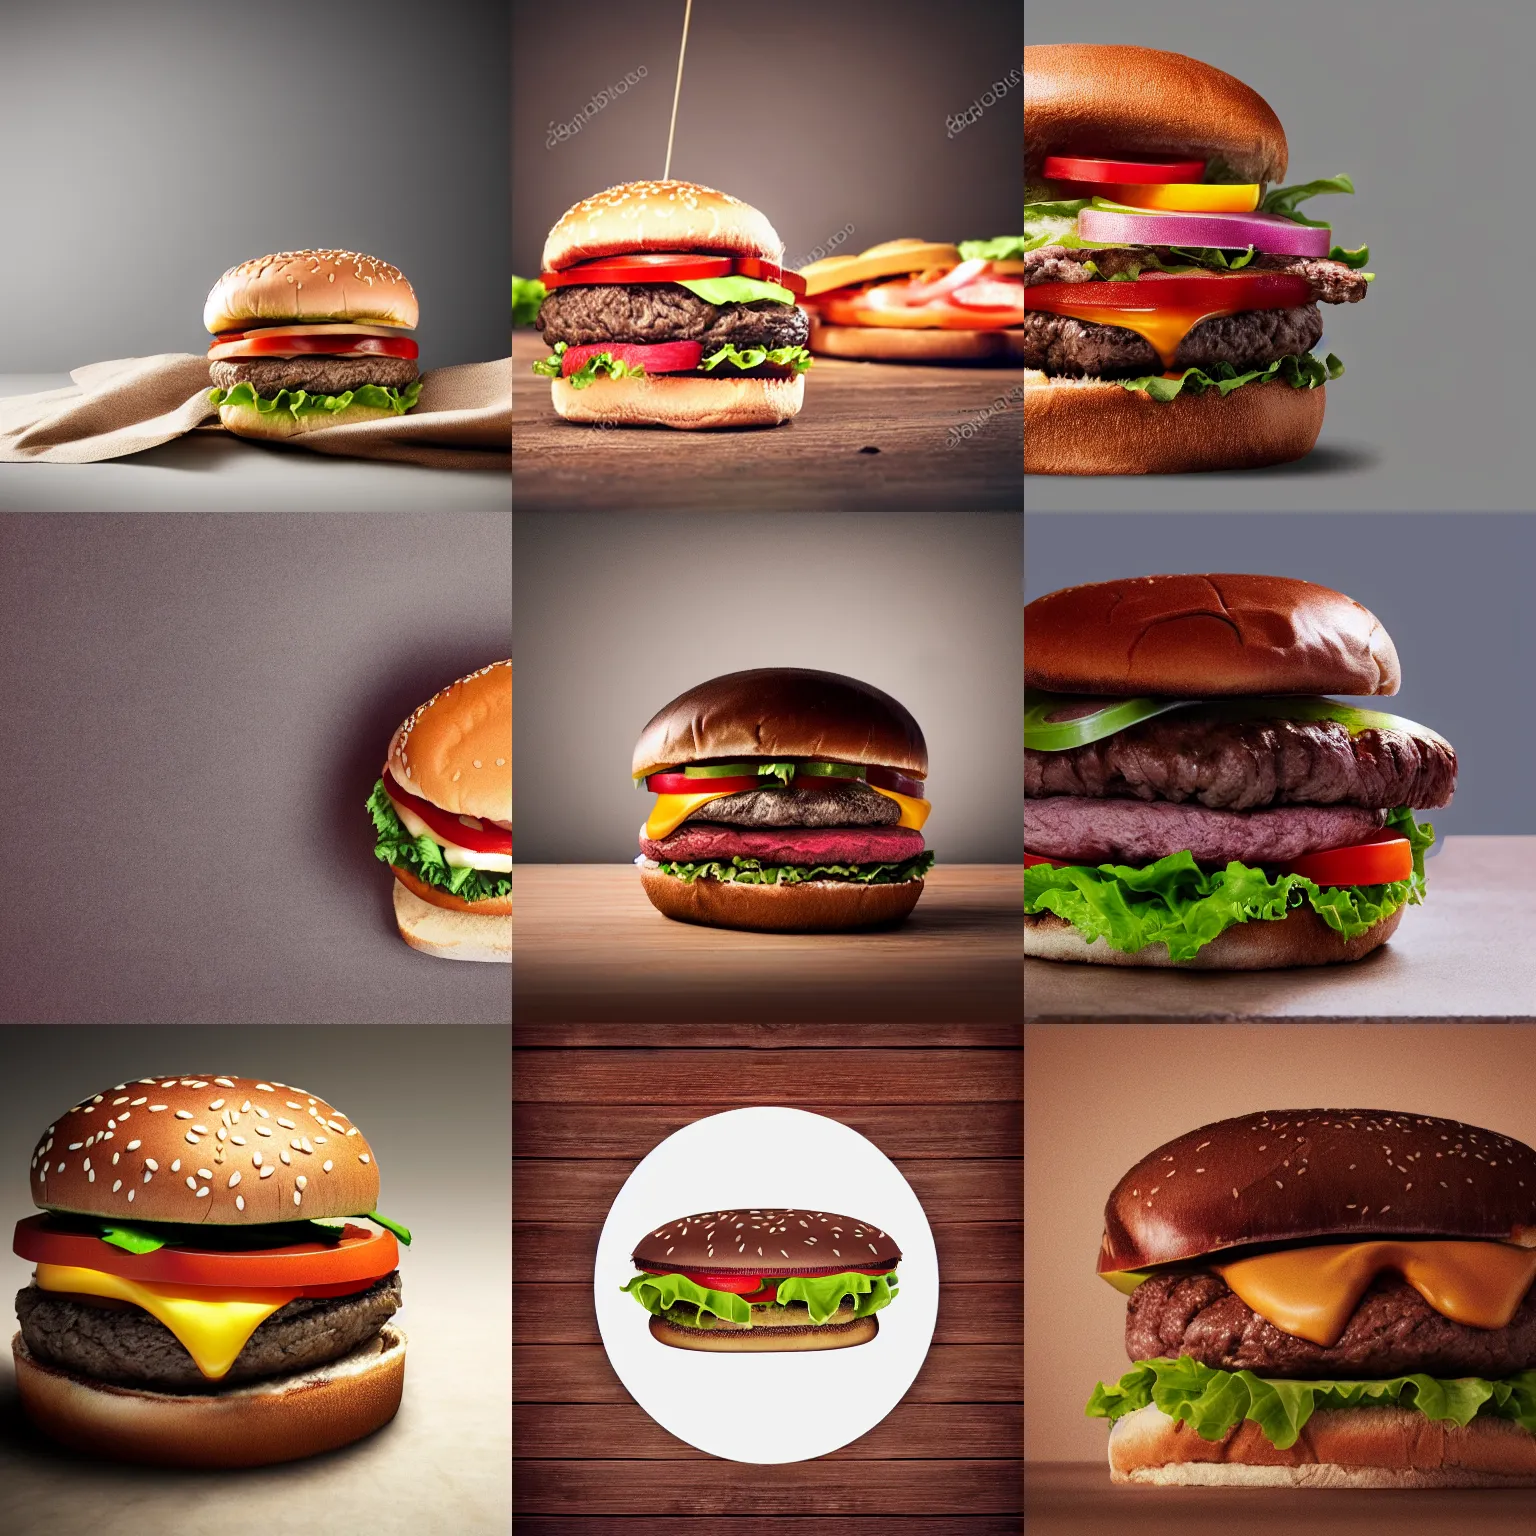 Prompt: a brown calf animal on a hamburger, photorealistic, studio lighting